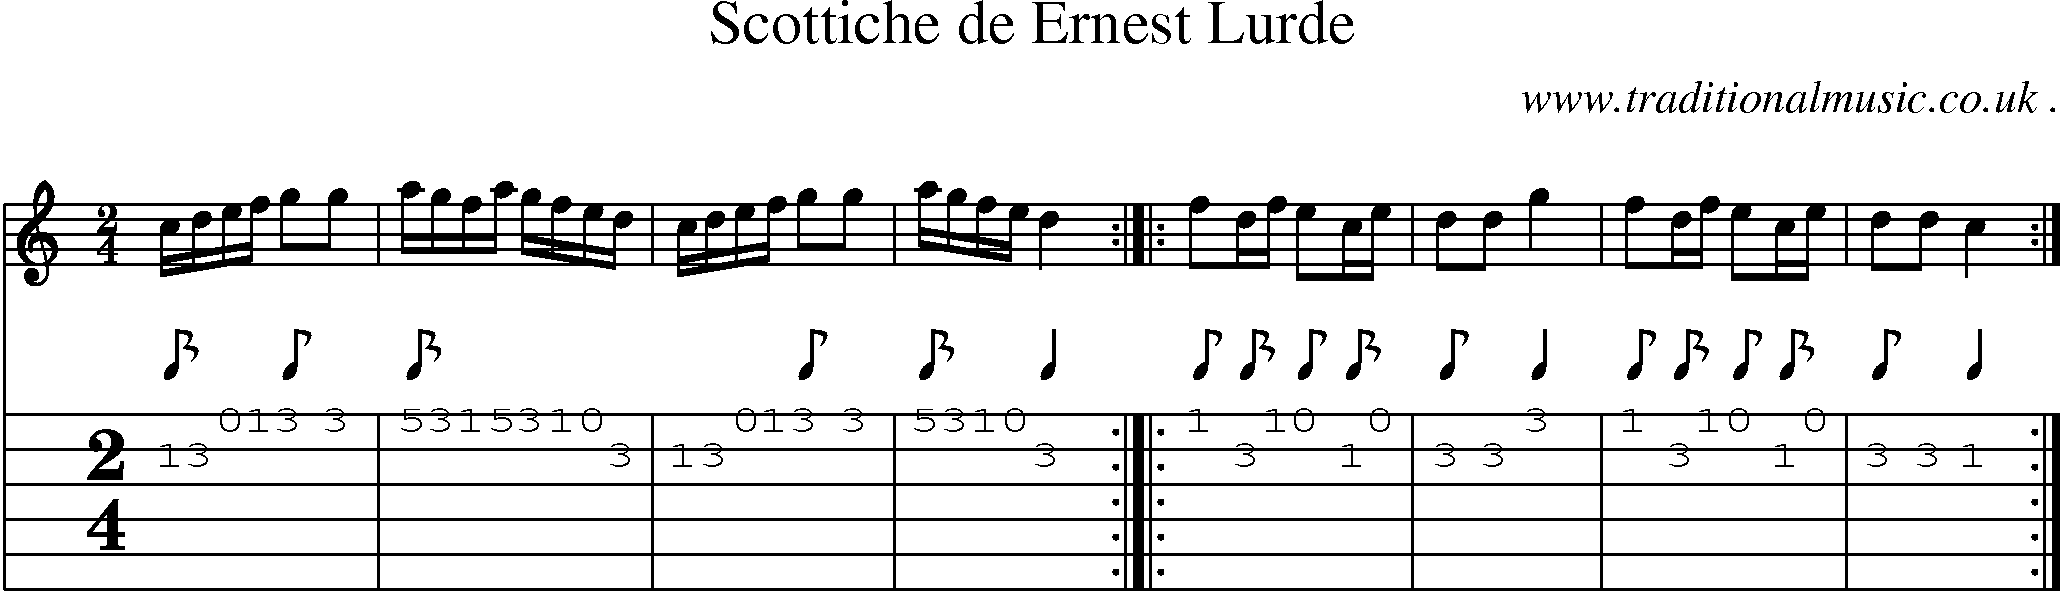 Sheet-Music and Guitar Tabs for Scottiche De Ernest Lurde